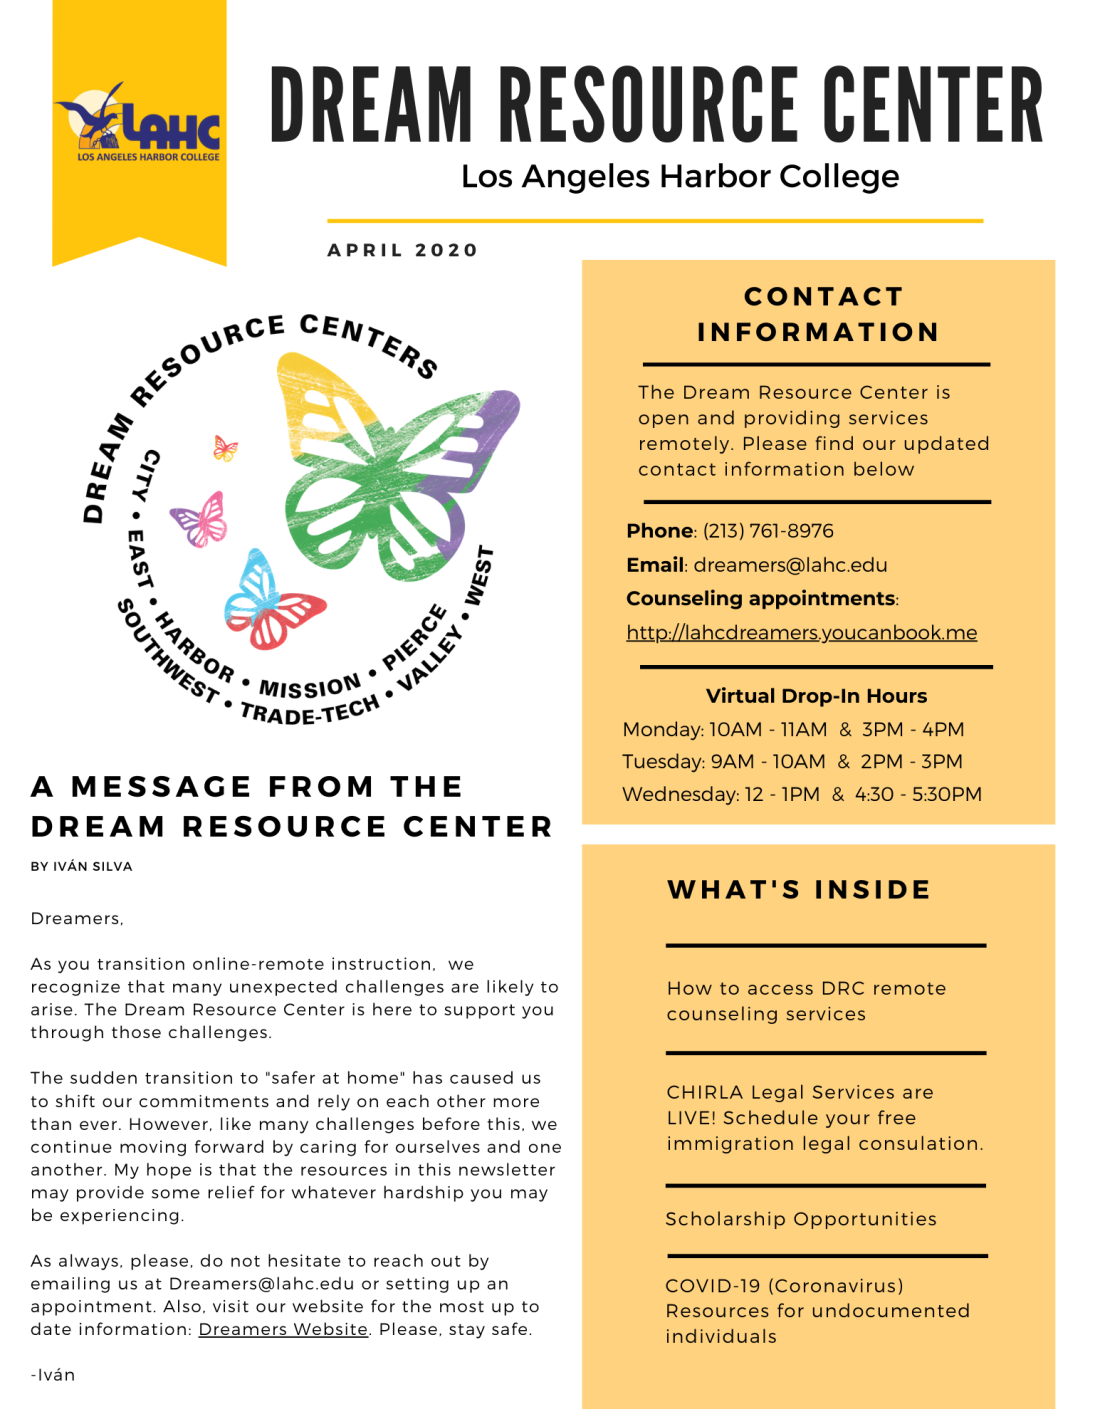 Dream Resources Center Infographic